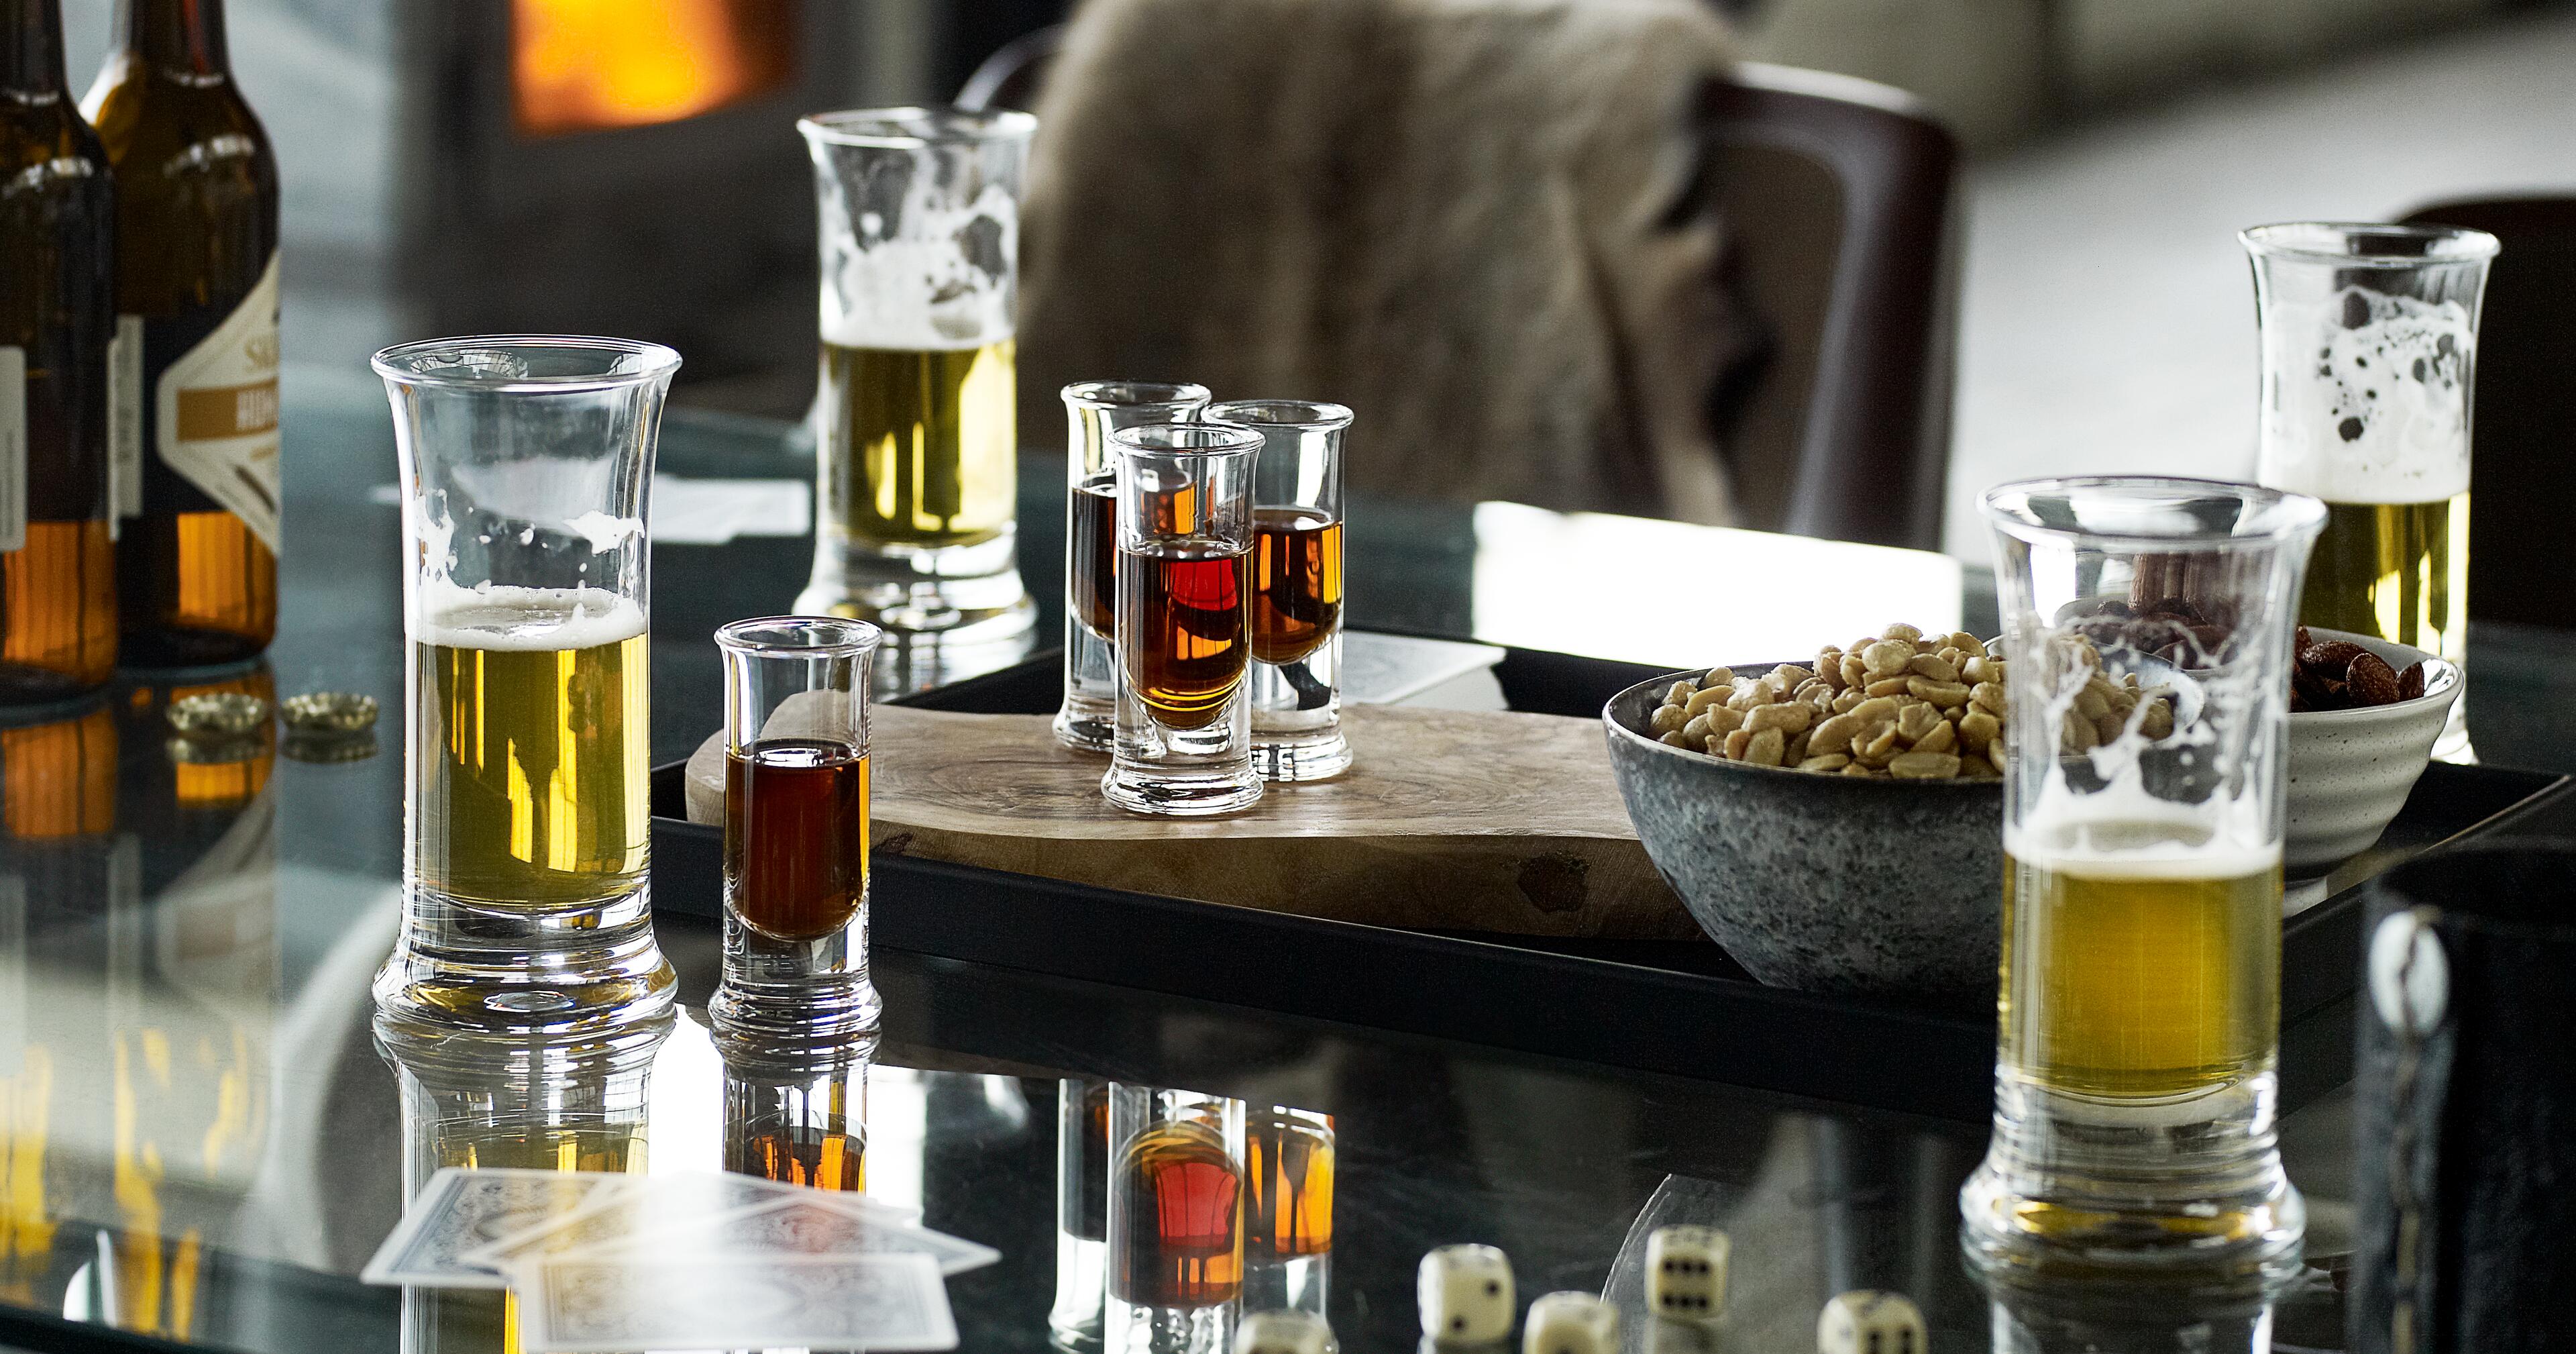 Holmegaard beer glass and shot glass.